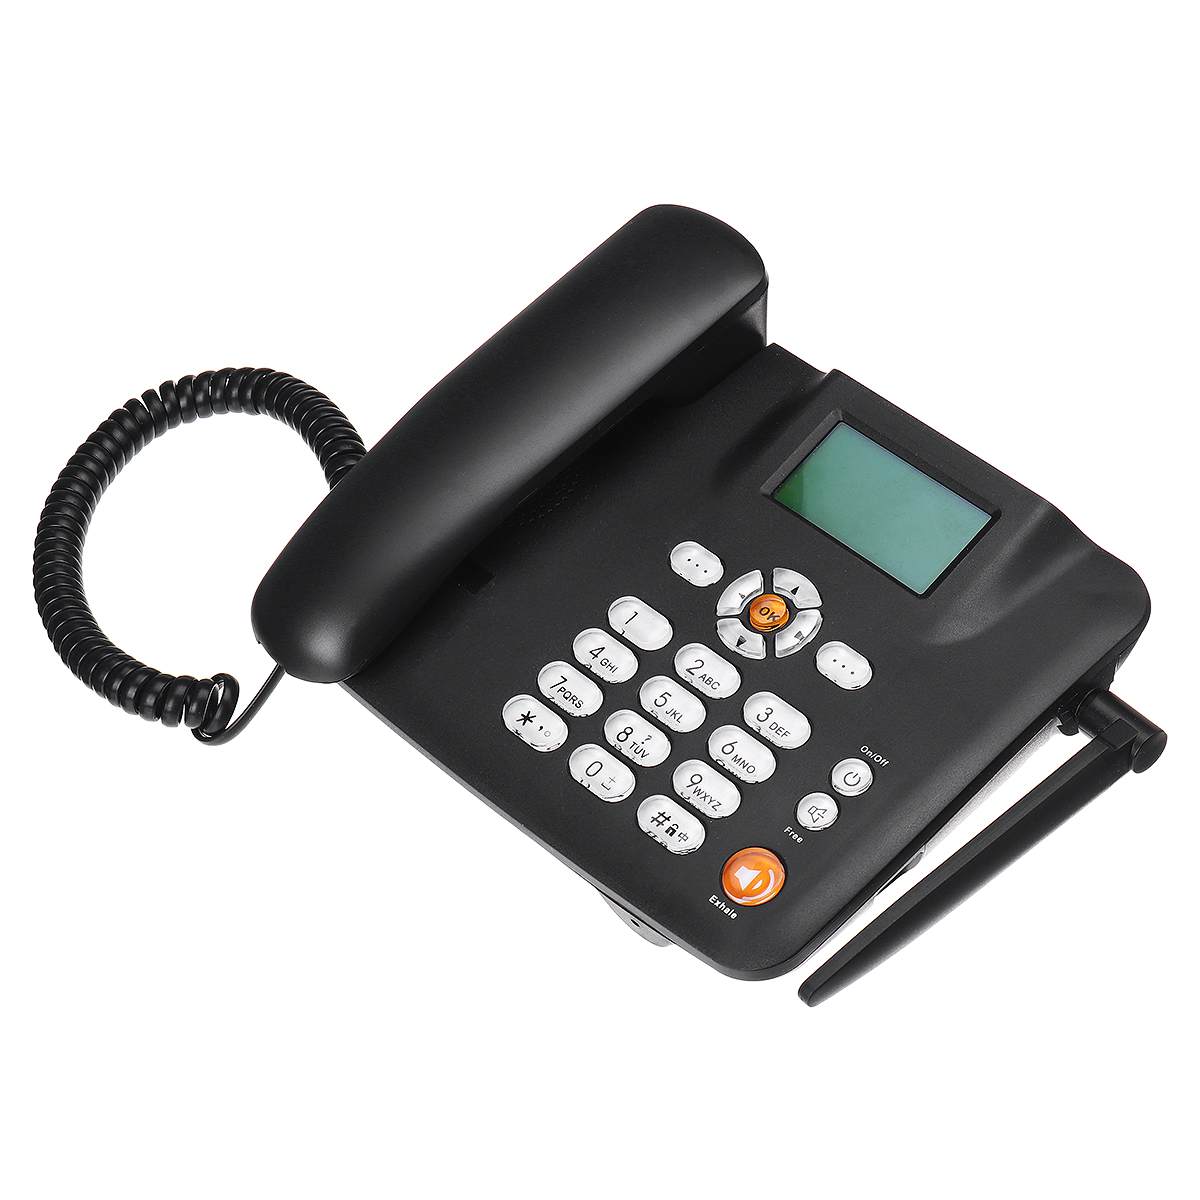 Teléfono inalámbrico portátil GSM teléfono de escritorio tarjeta SIM teléfono fijo de escritorio fijo SNS teléfono Home Office 2G